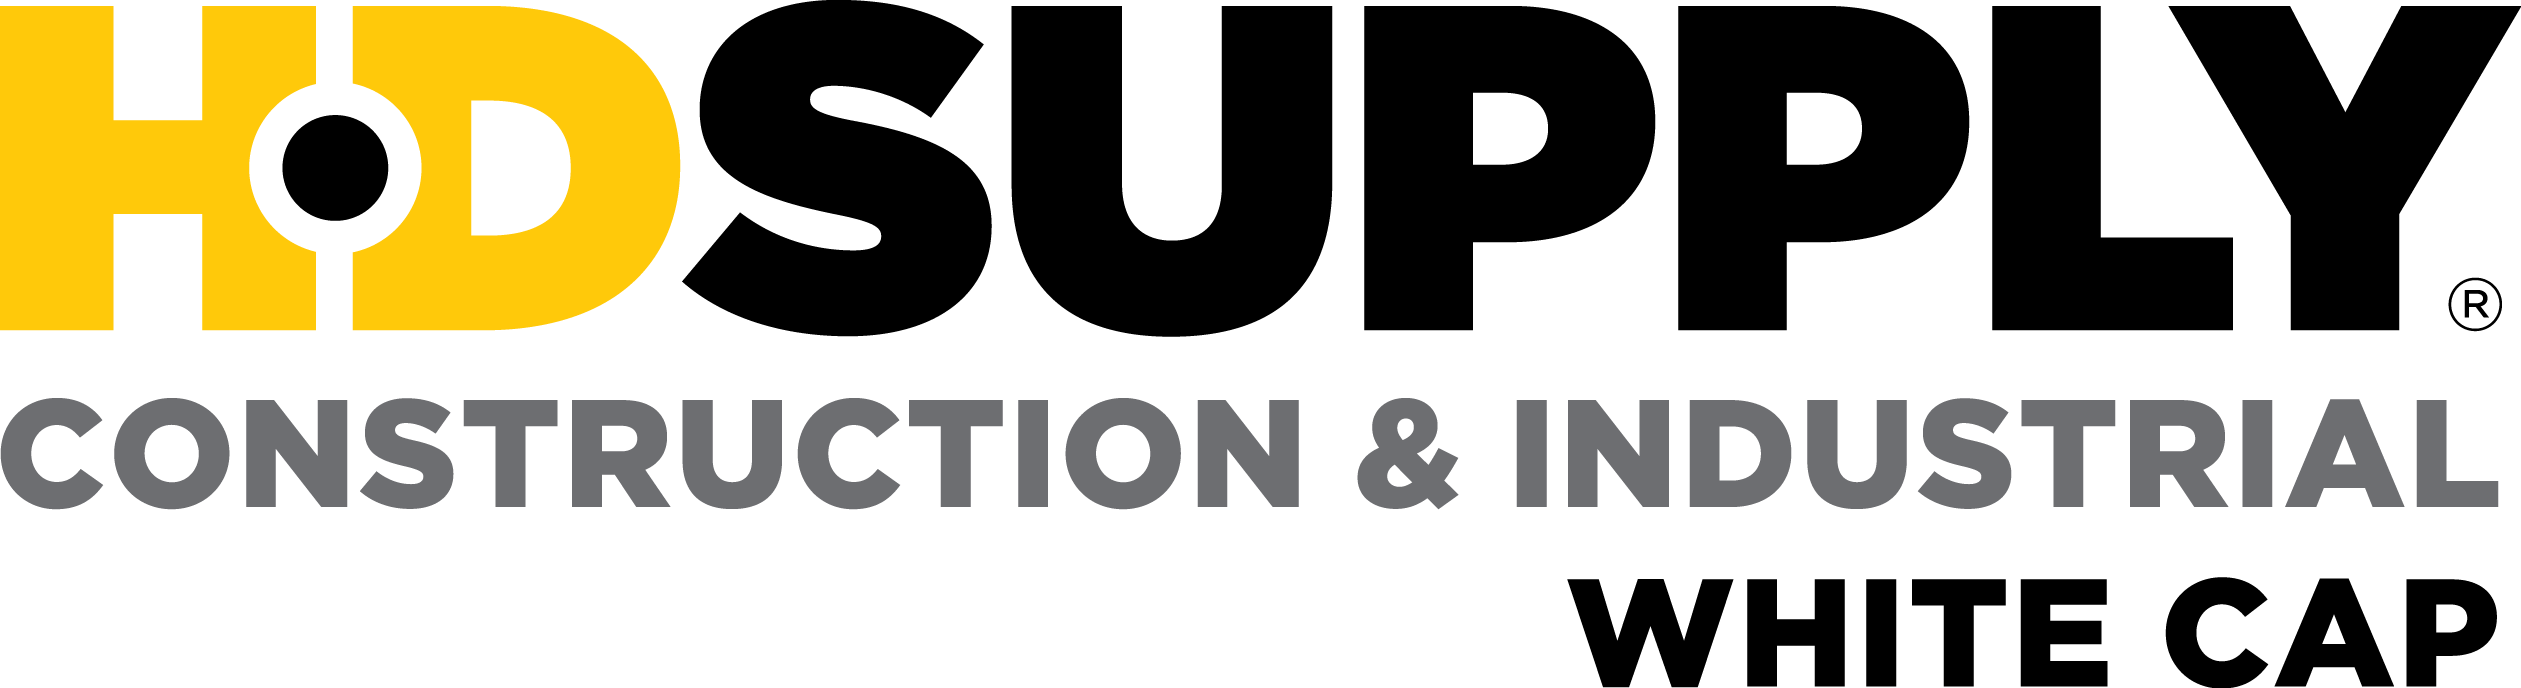 White Cap Construction Logo - Resource Center - HD Supply White Cap News